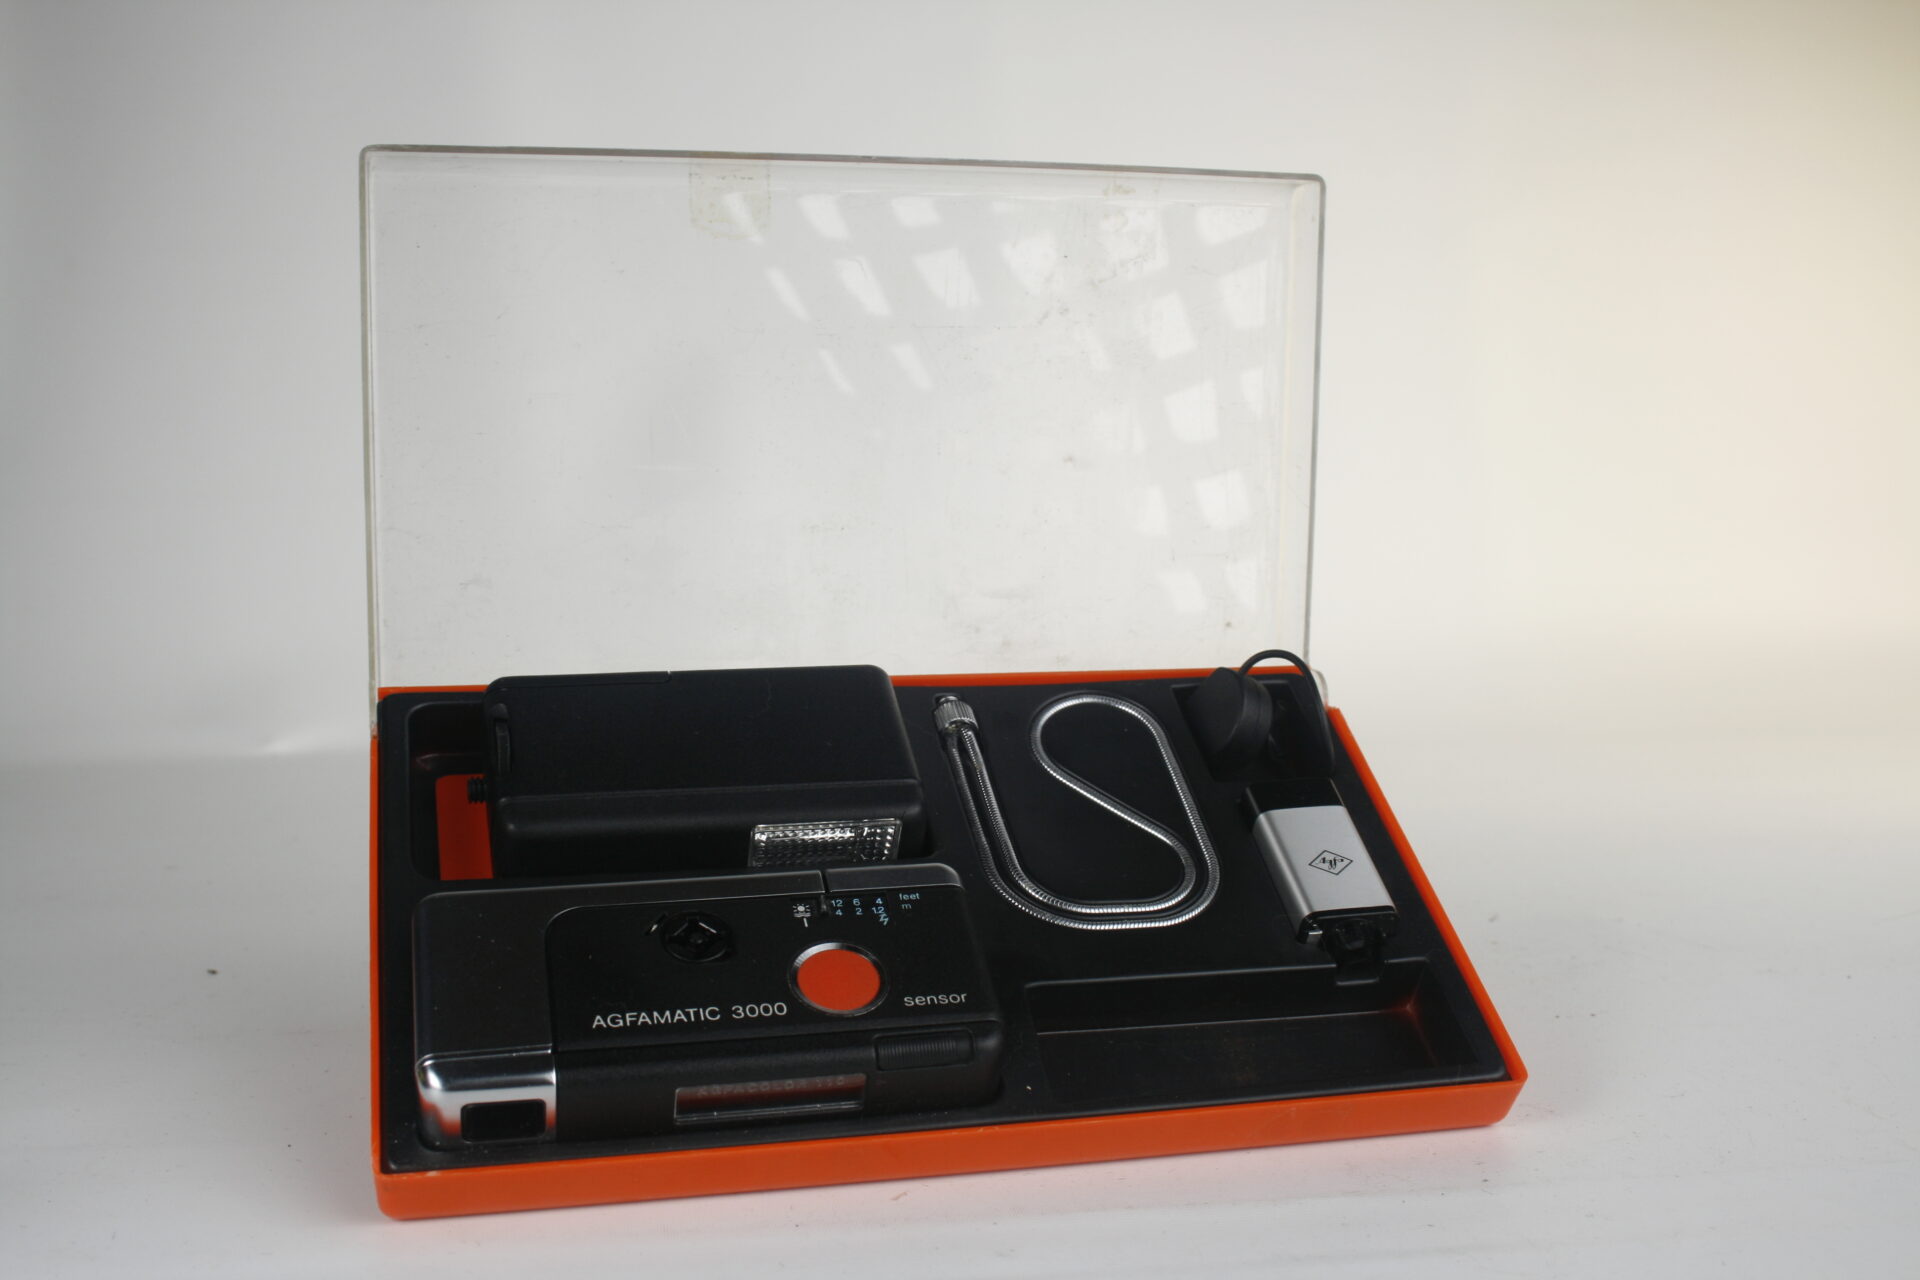 Agfa Agfamatic 3000 pocket sensor. 110 cartridge film. Pocket camera. 1974. Duitsland